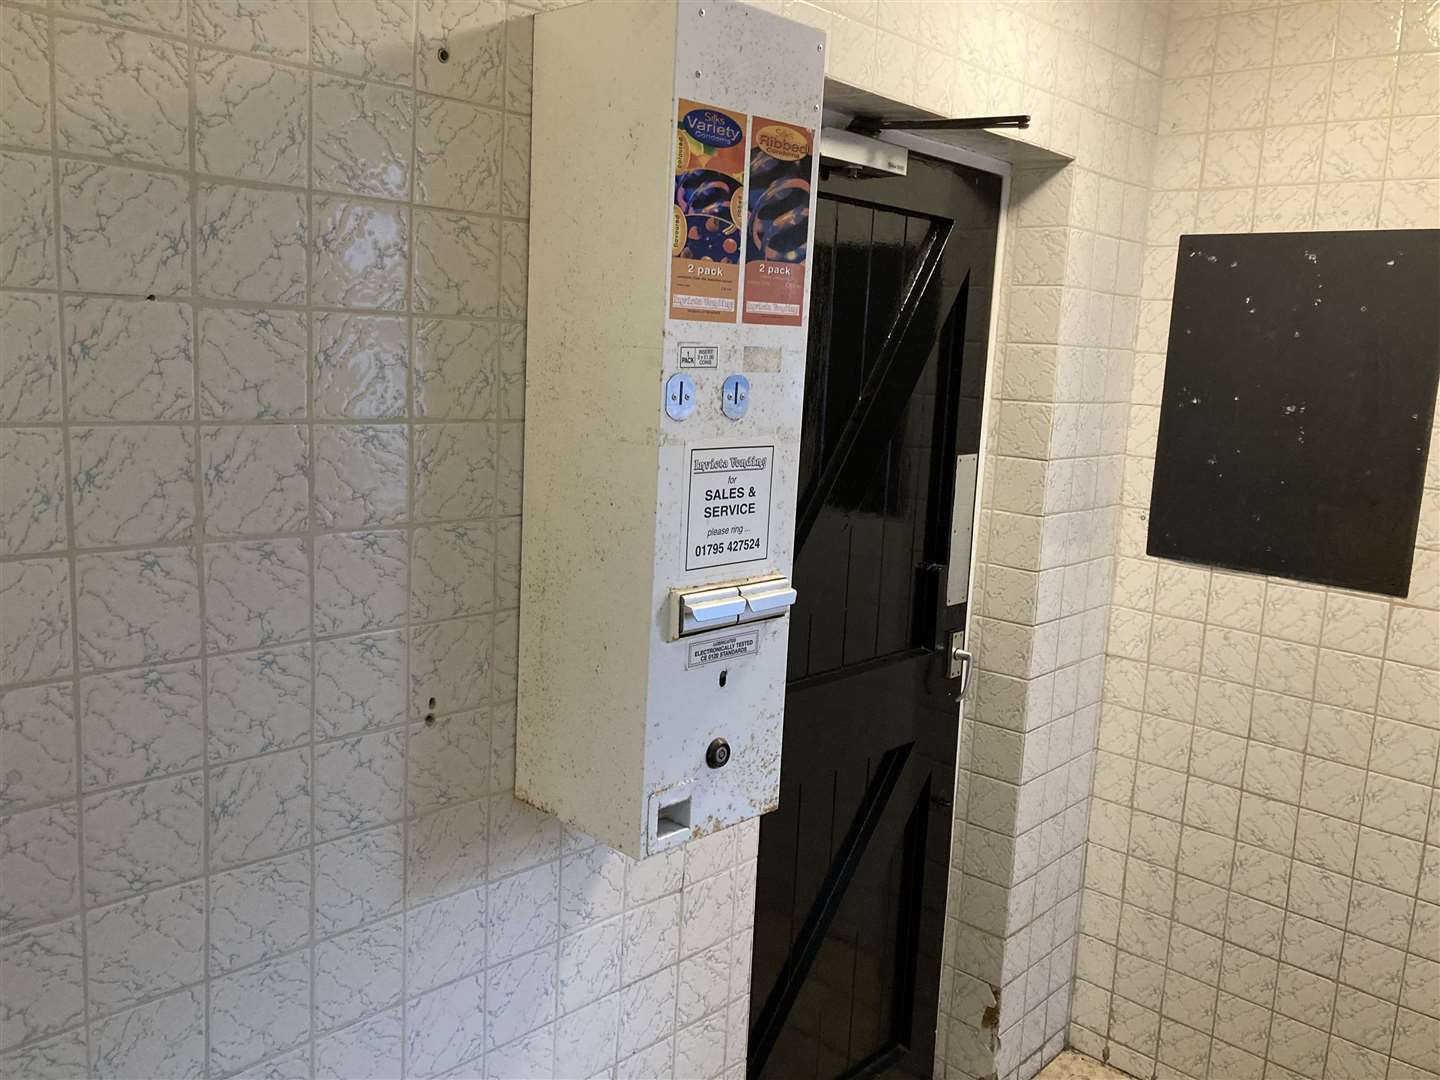 A battered vending machine